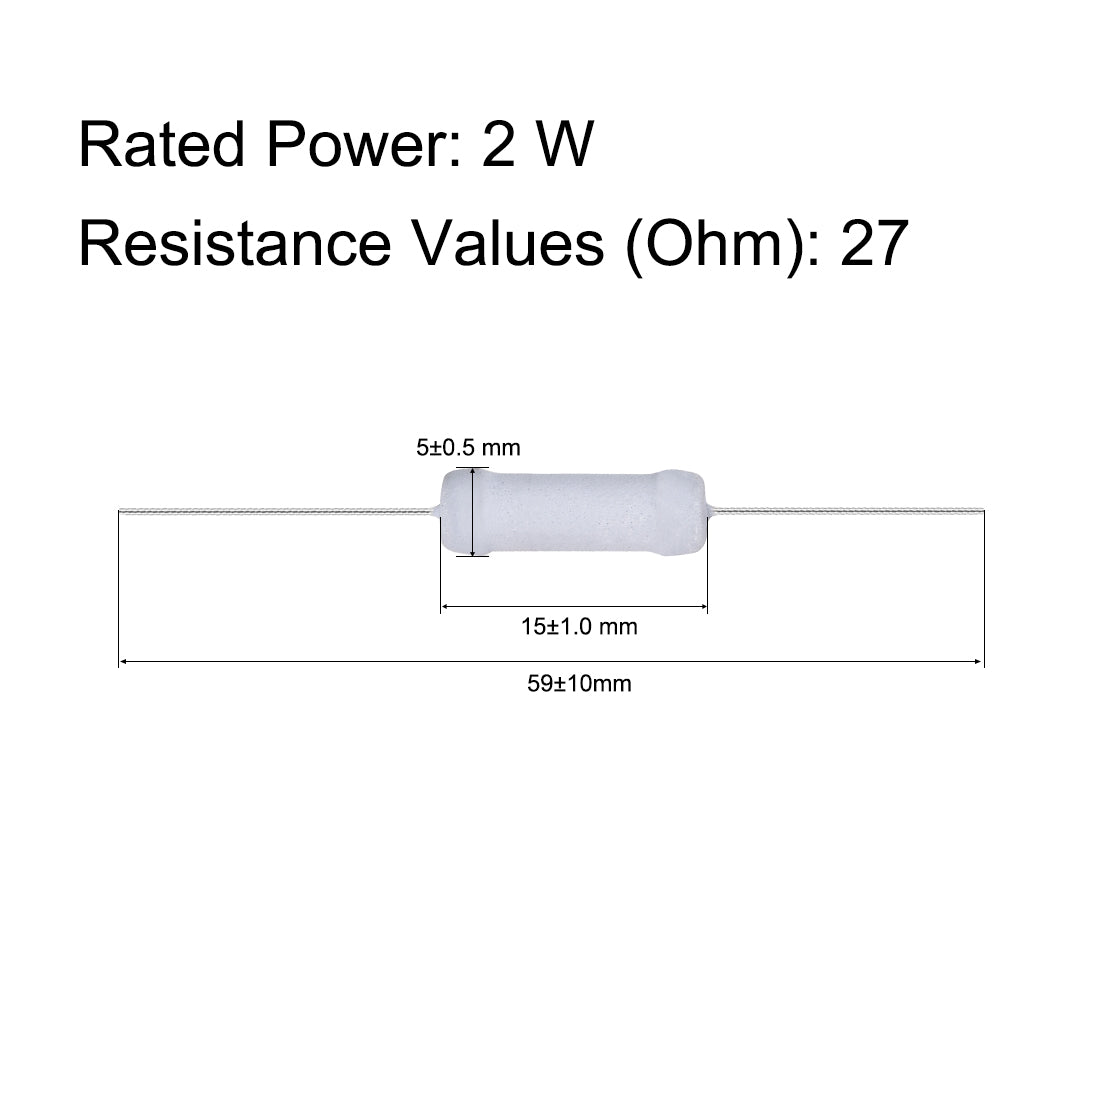 uxcell Uxcell 30pcs 2W 2 Watt Metal Oxide Film Resistor Axile Lead 27 Ohm ±5% Tolerance